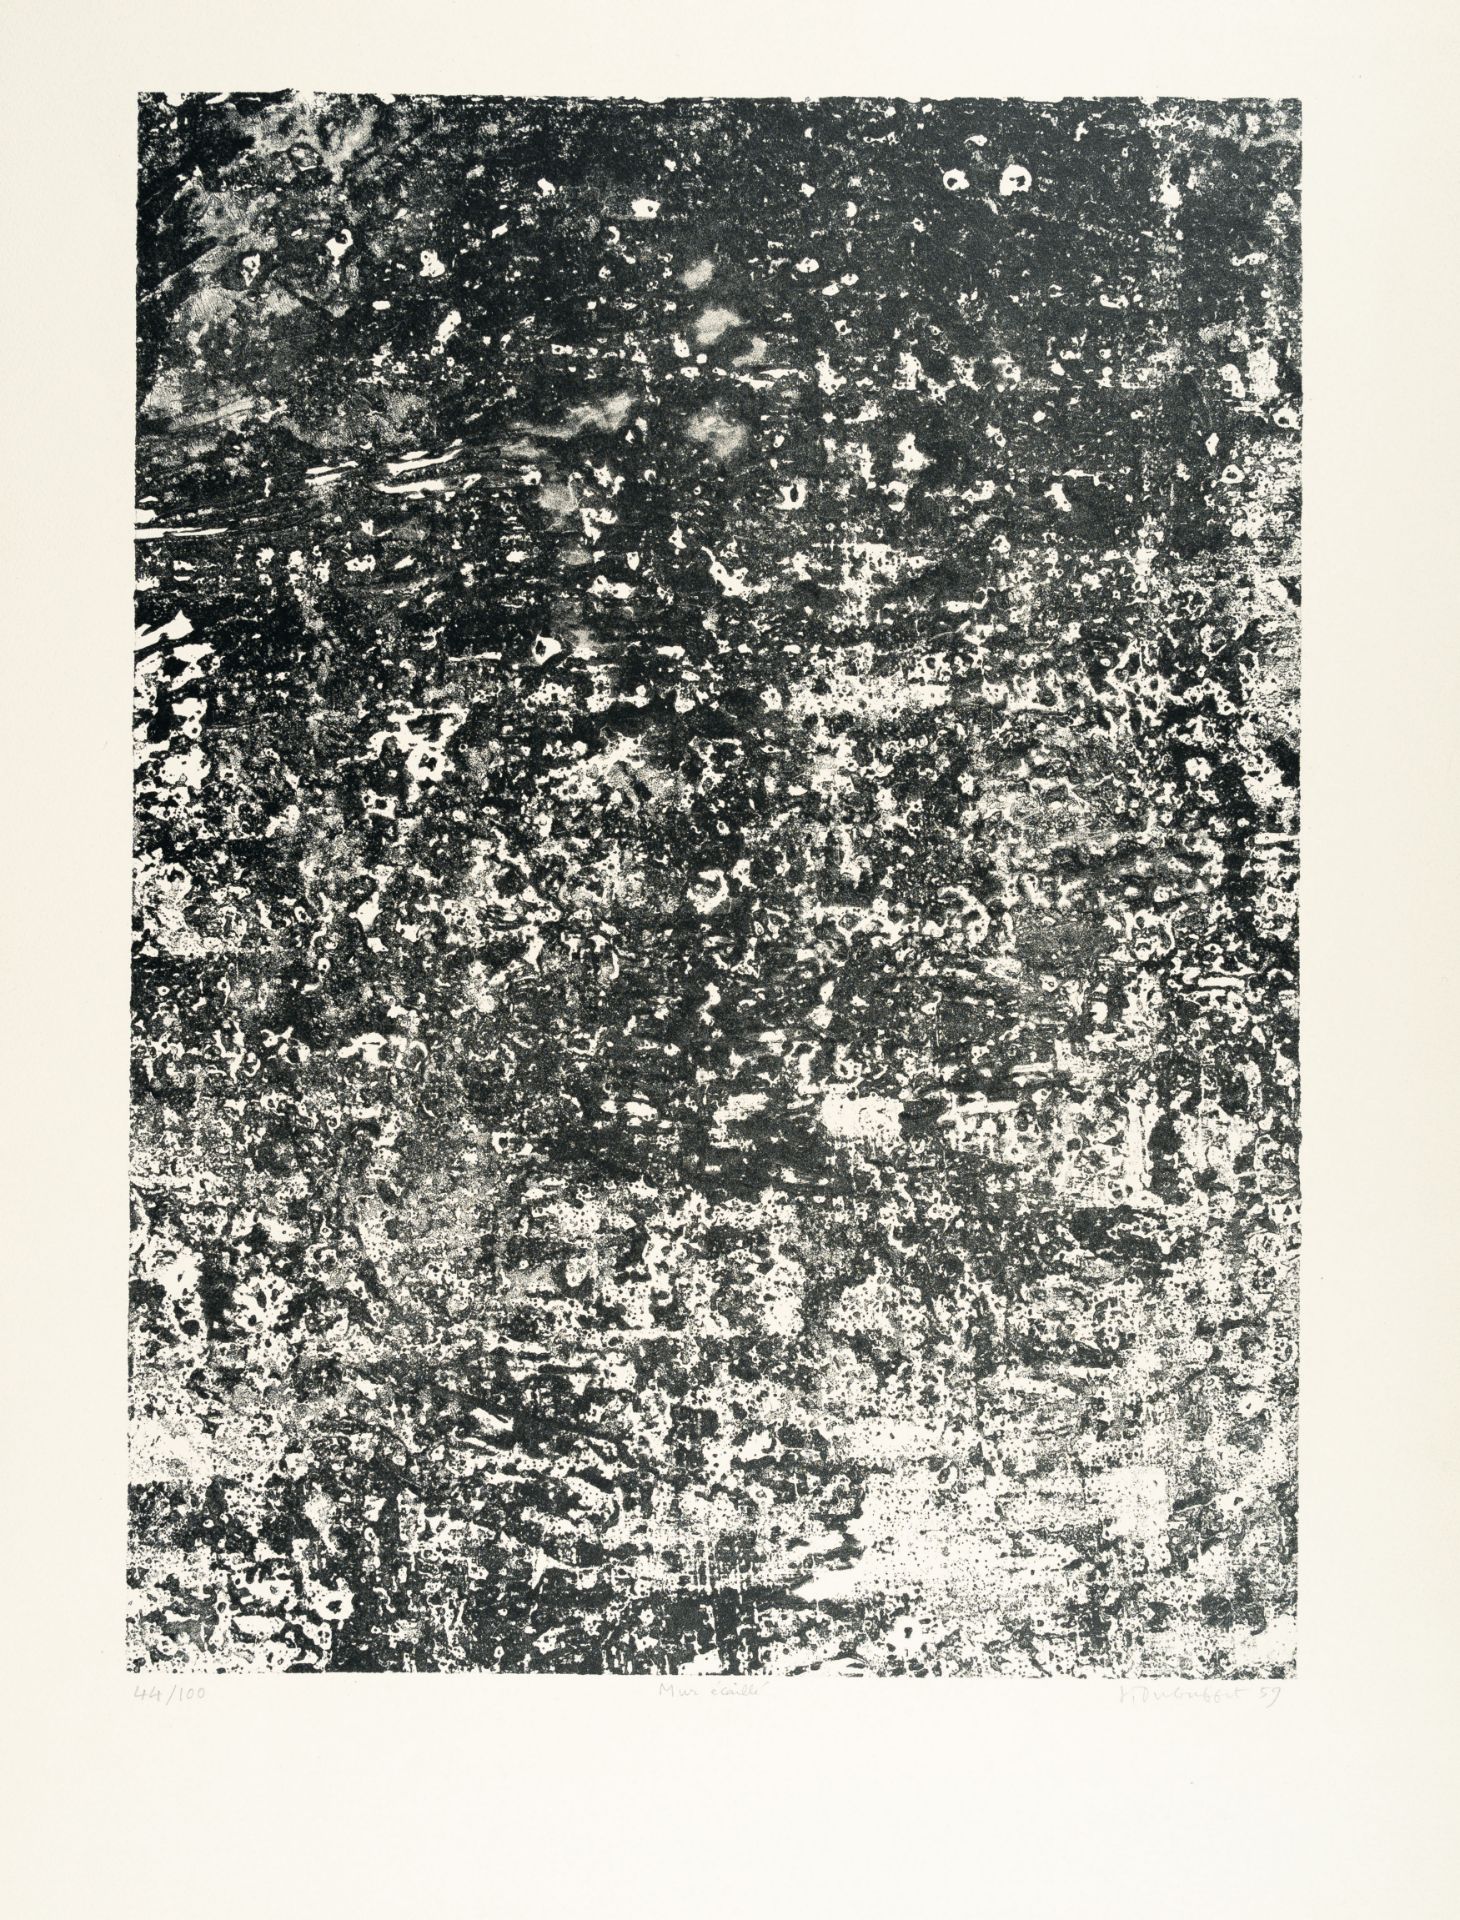 Jean Dubuffet, „Mur écaillé".Lithograph on wove by Arches. (19)59. Ca. 51.5 x 38.5 cm (sheet size